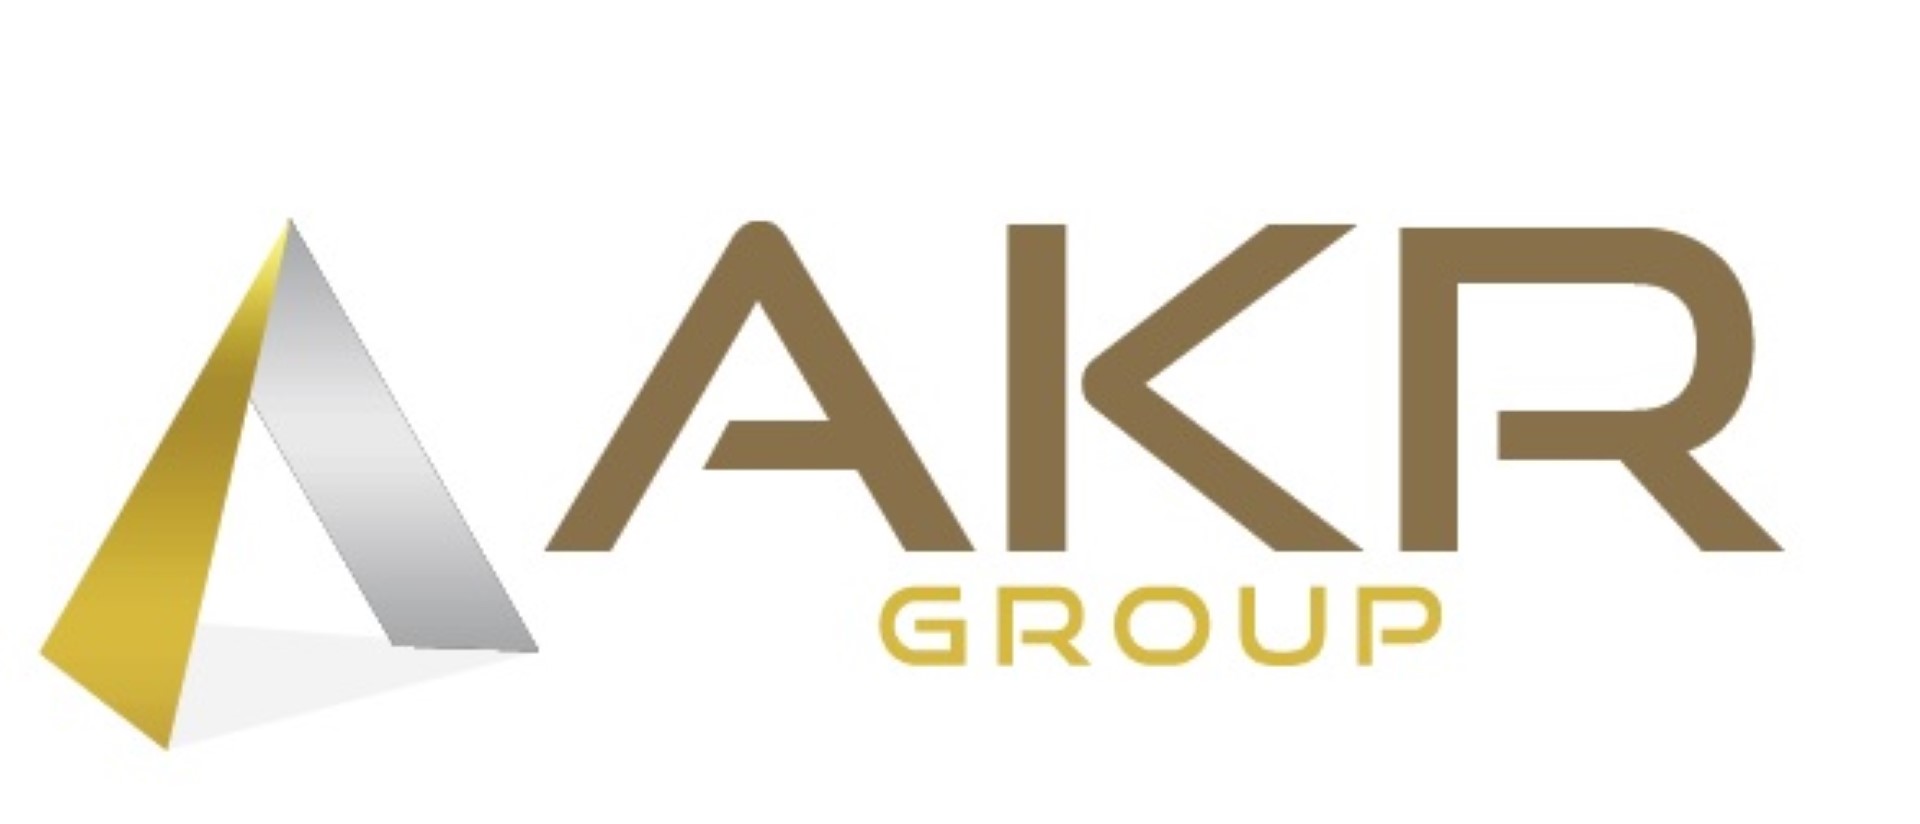 Akr Group Construction